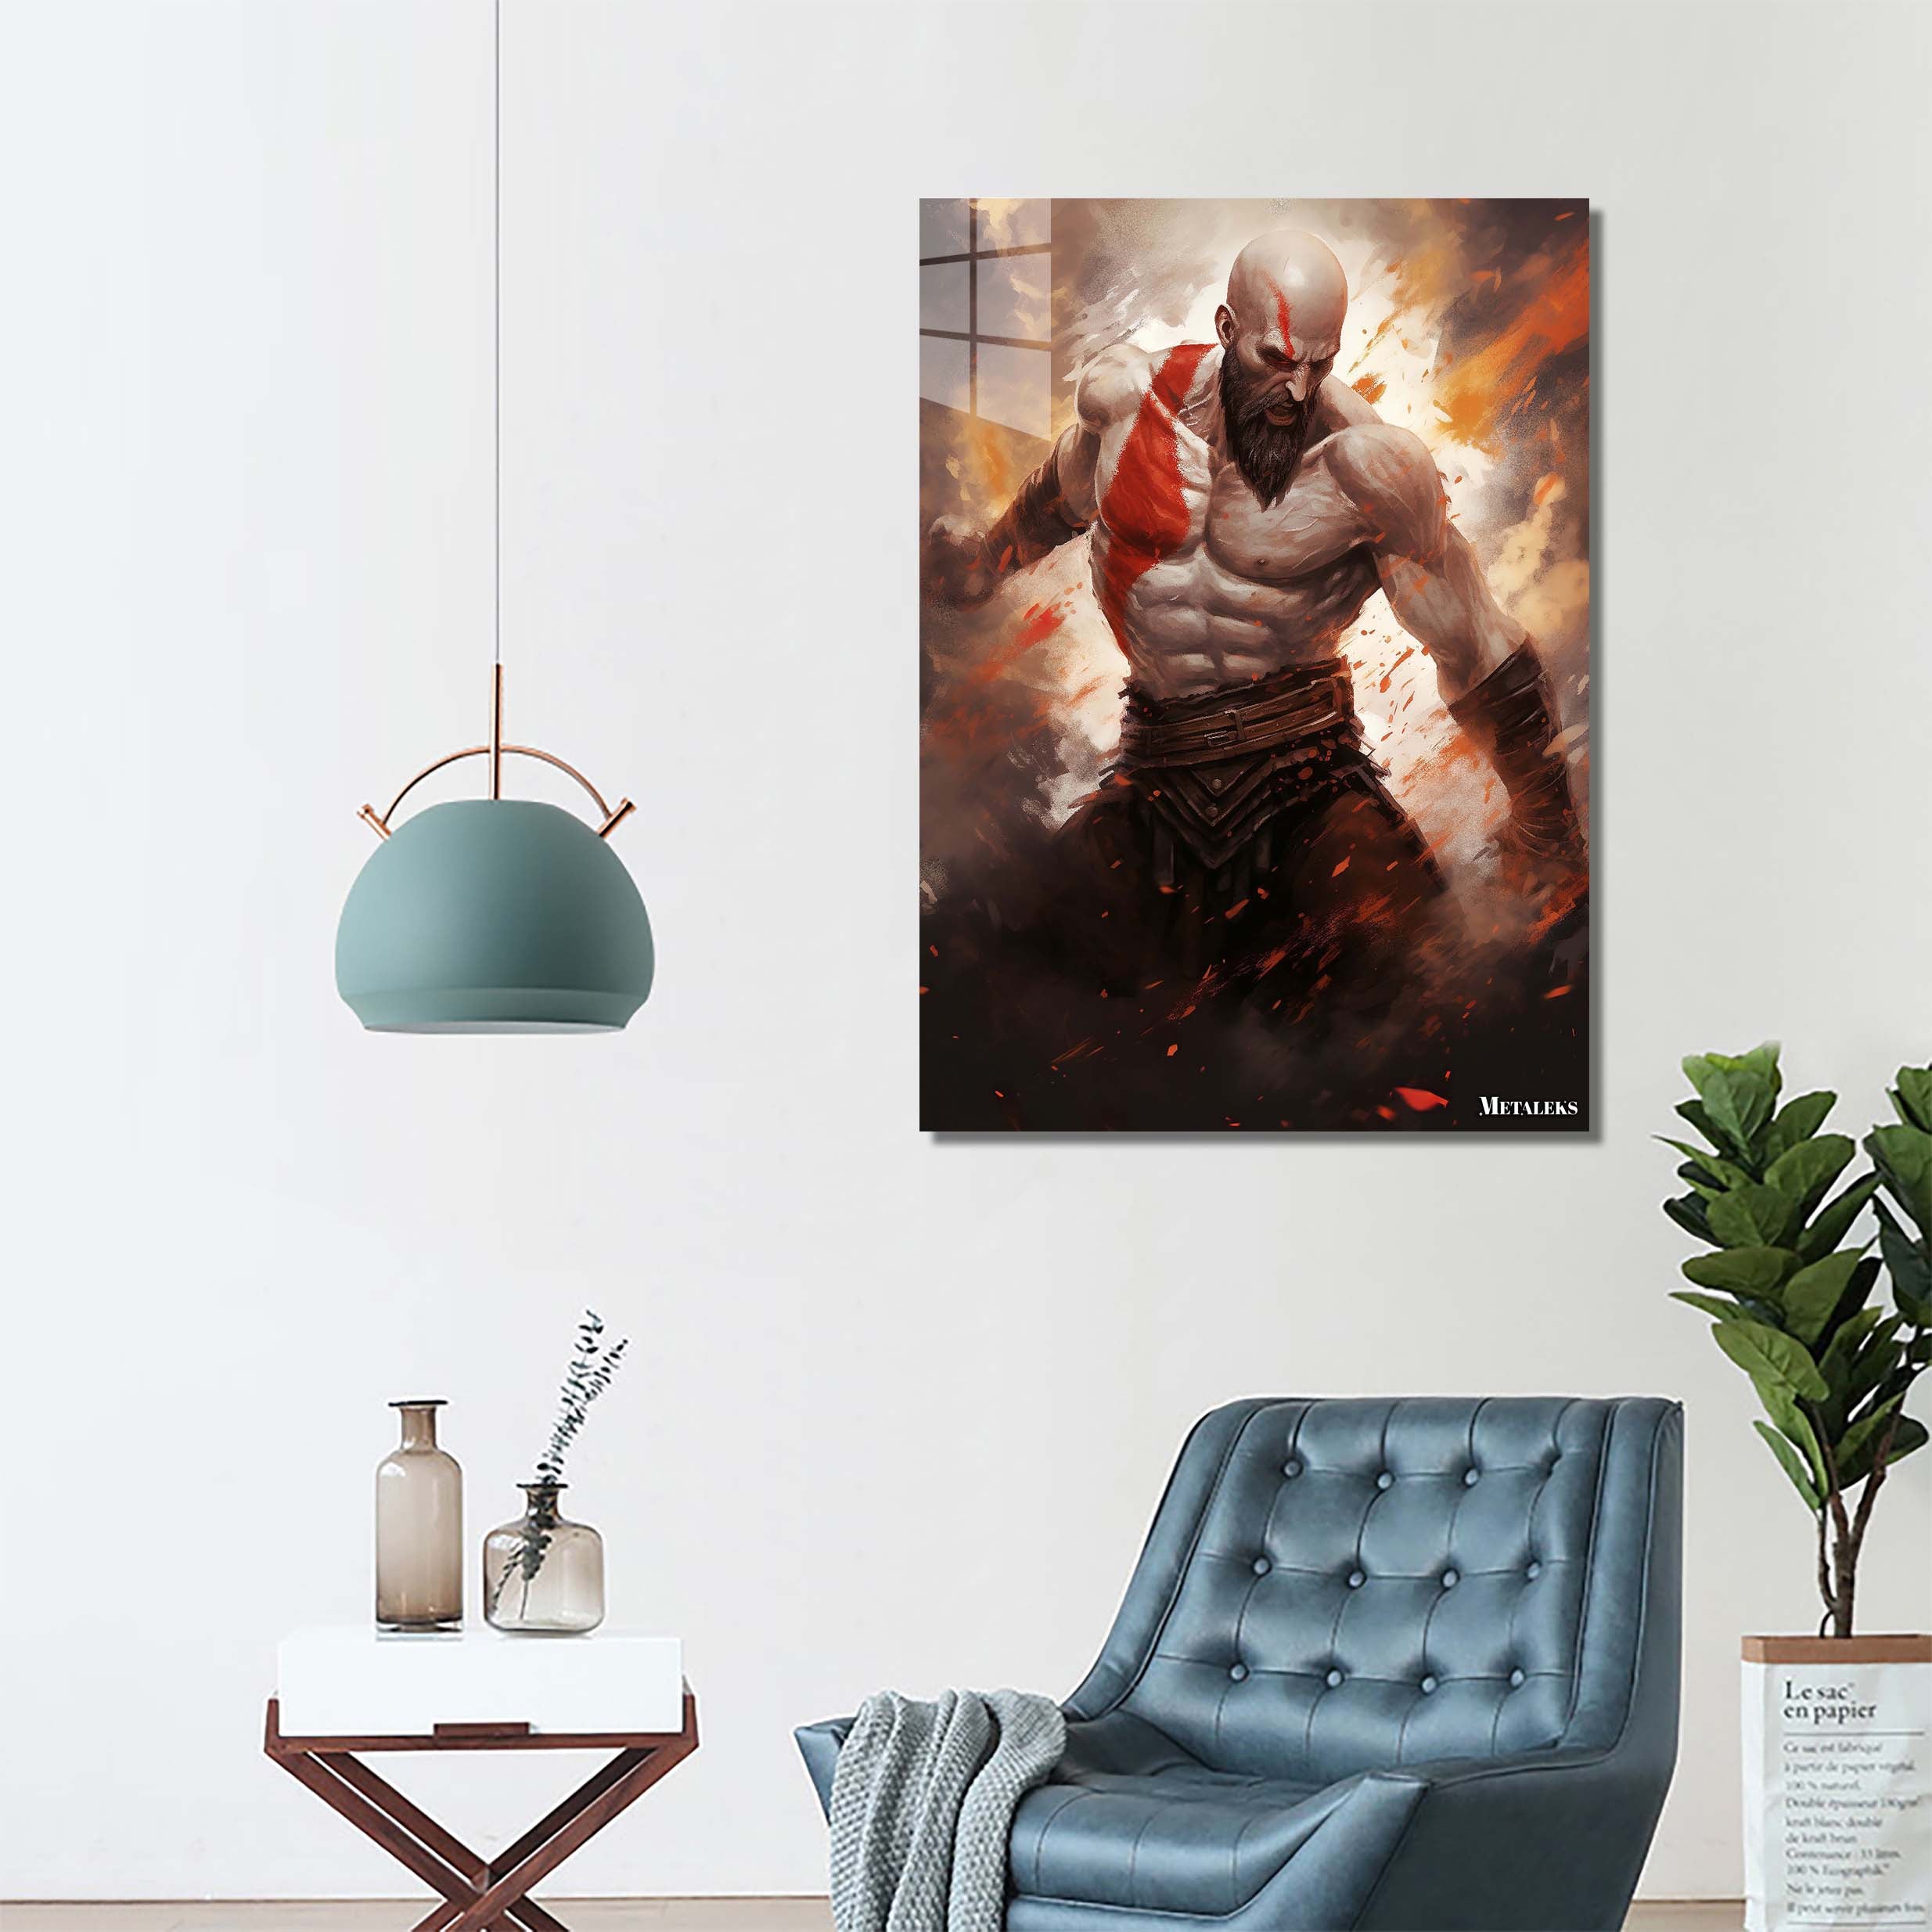 Kratos  God of War  Game-designed by @WATON CORET